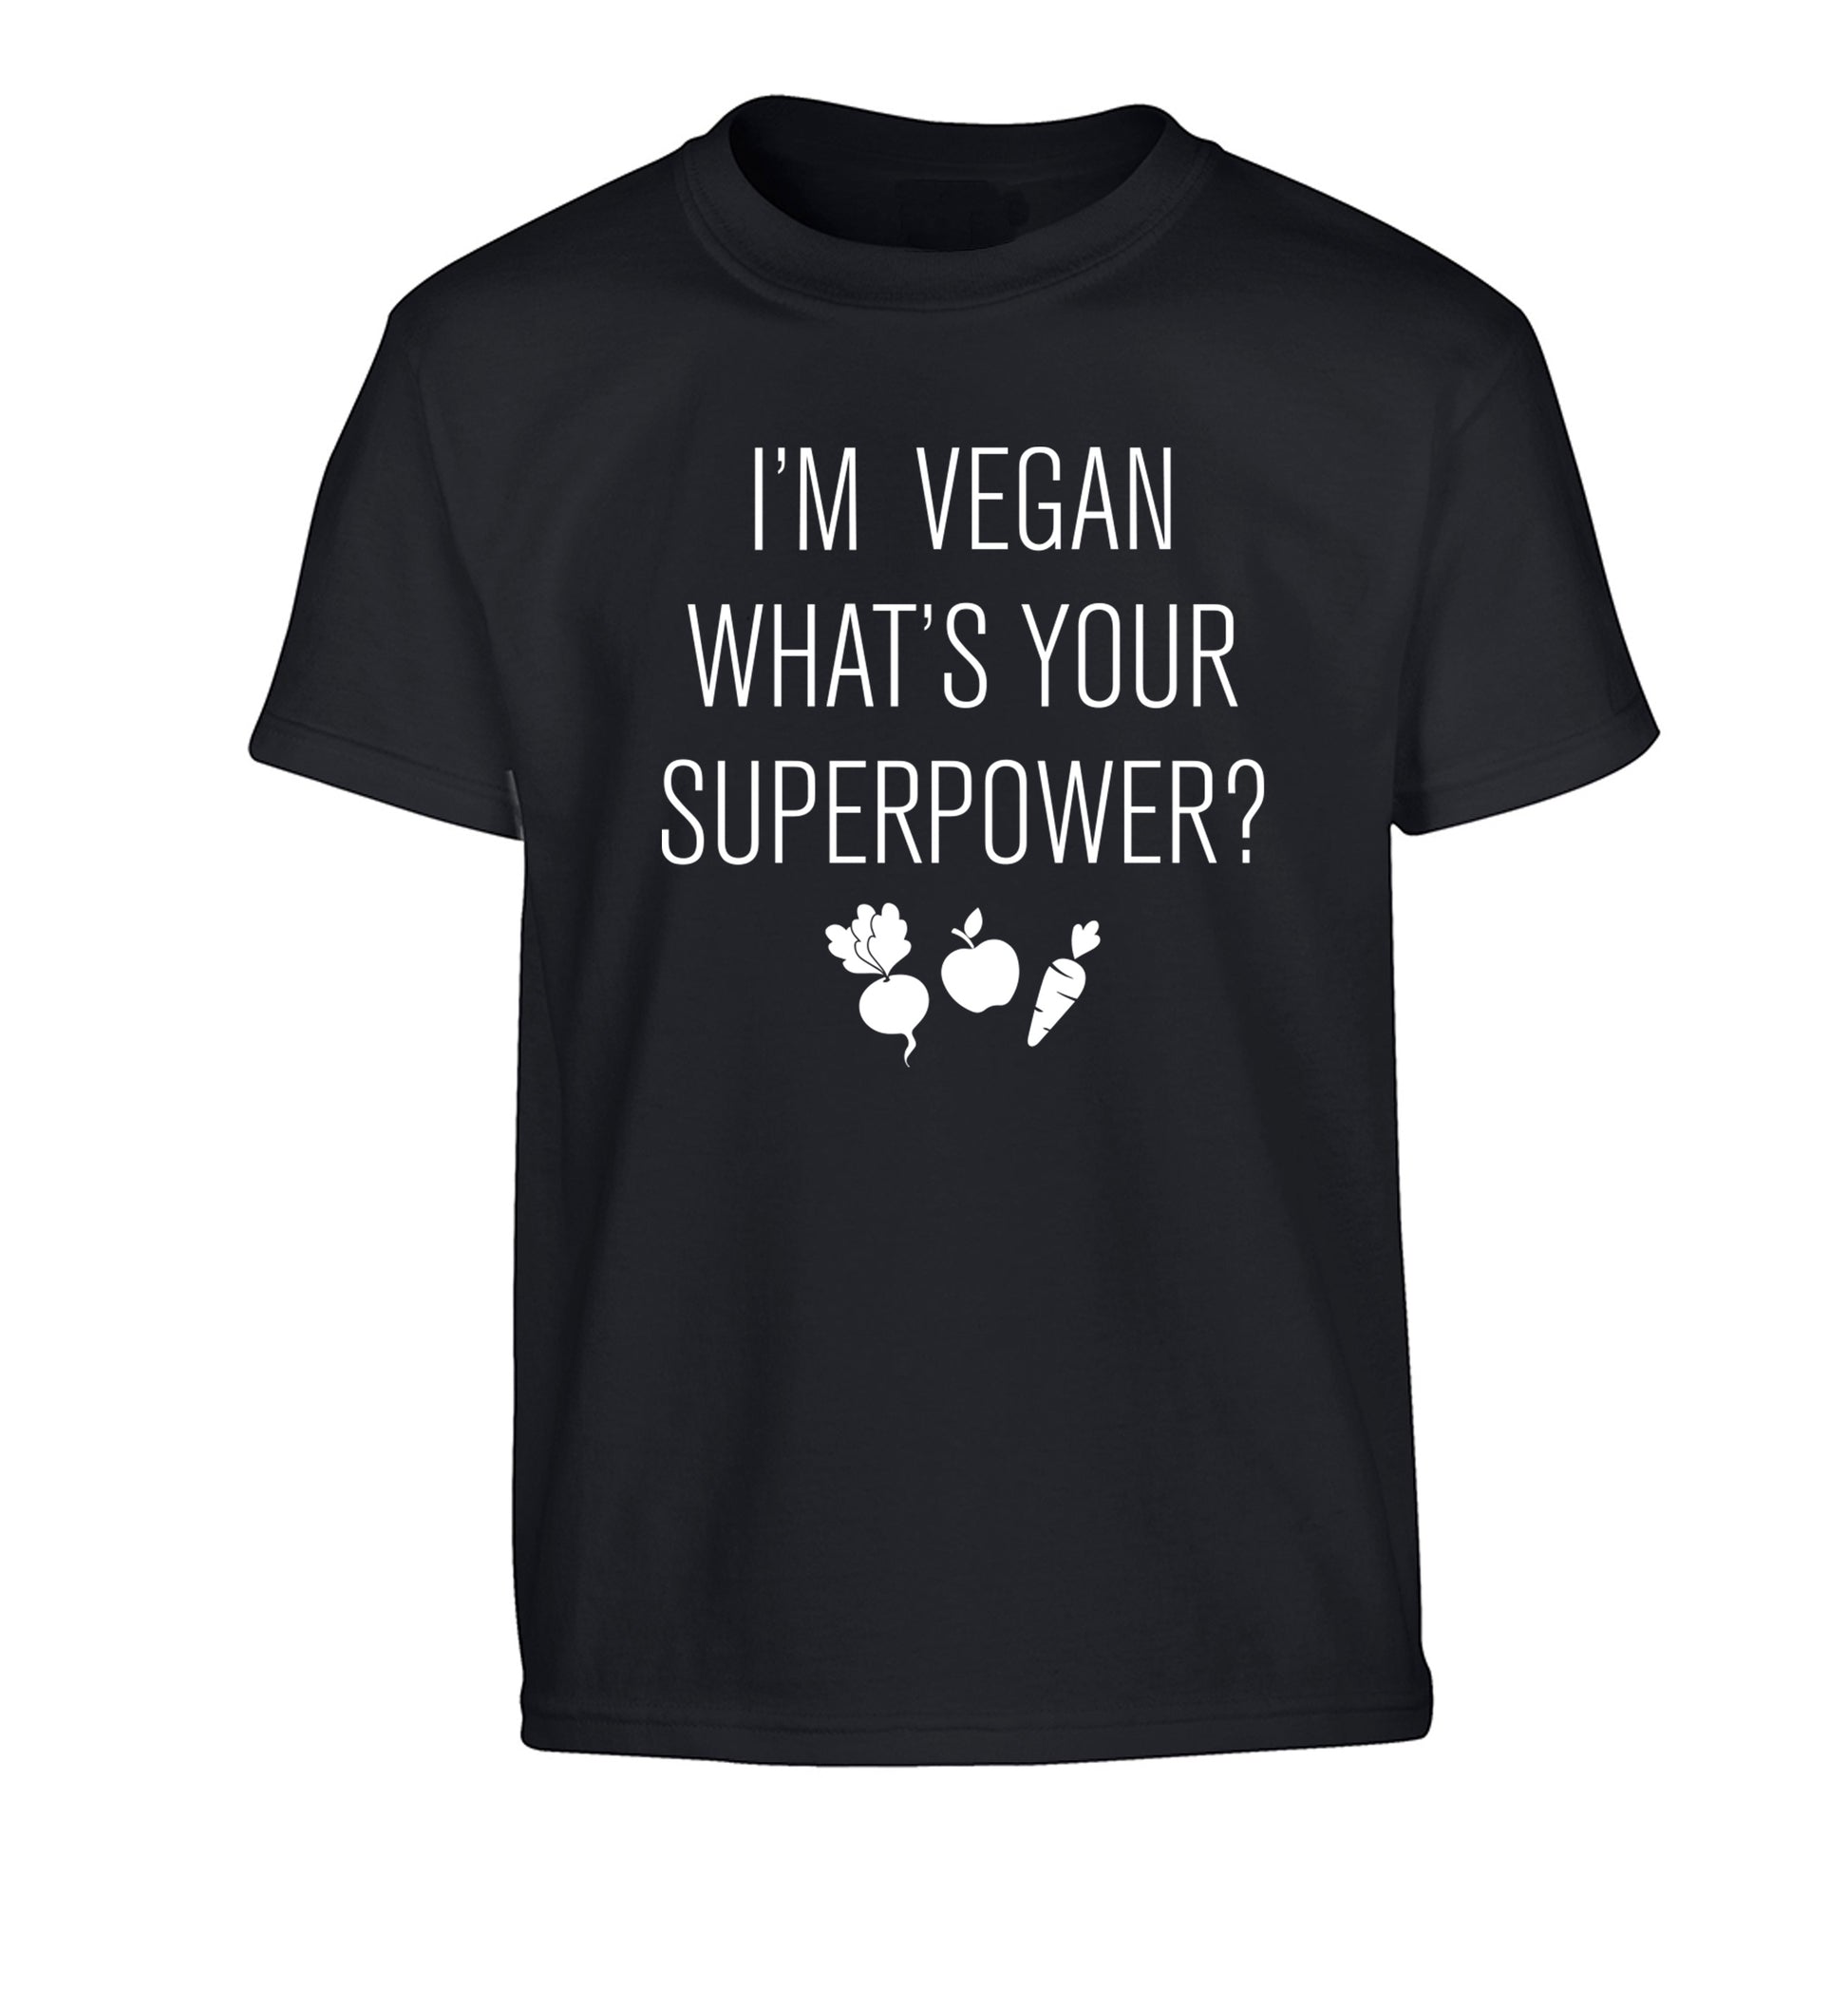 I'm Vegan What's Your Superpower? Children's black Tshirt 12-13 Years